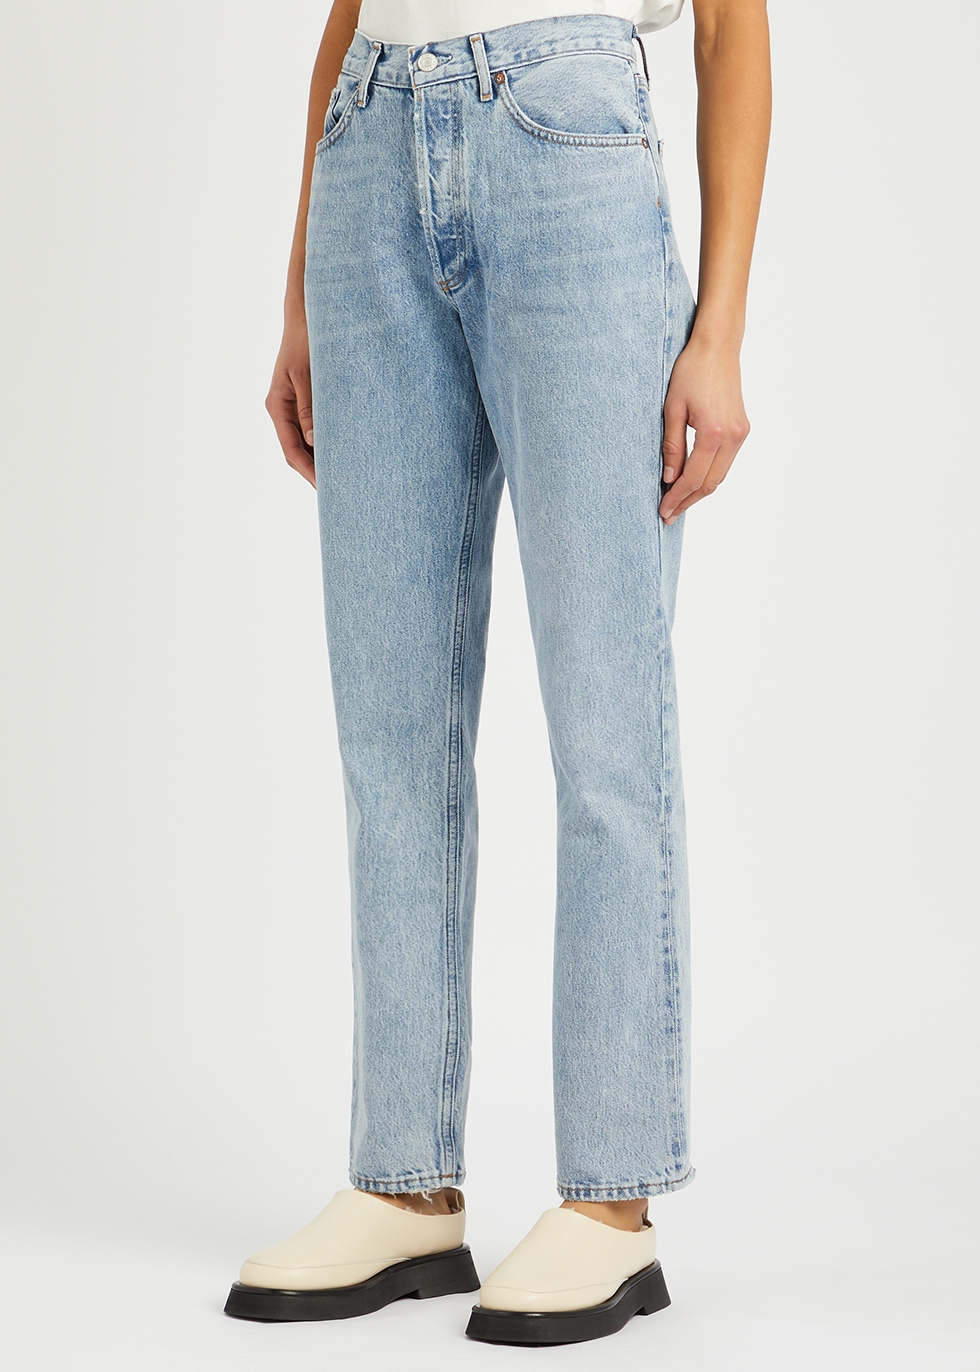 AGOLDE Lana light blue straight-leg jeans - Harvey Nichols